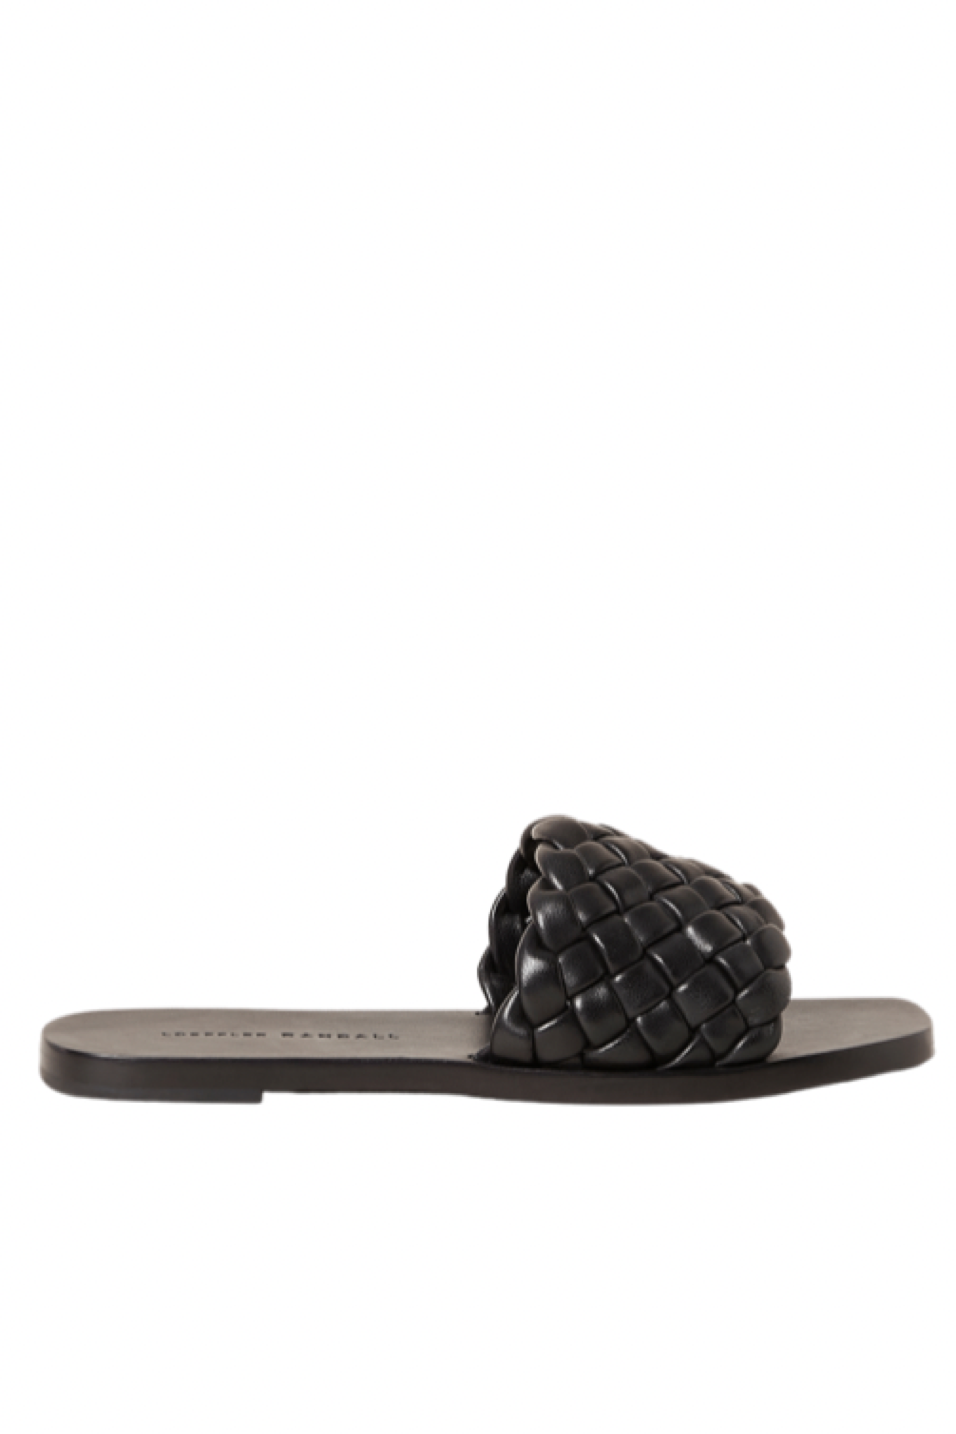 Sorel Black Ella Leather Woven Sandals | Woven leather sandals, Woven  sandals, Leather weaving